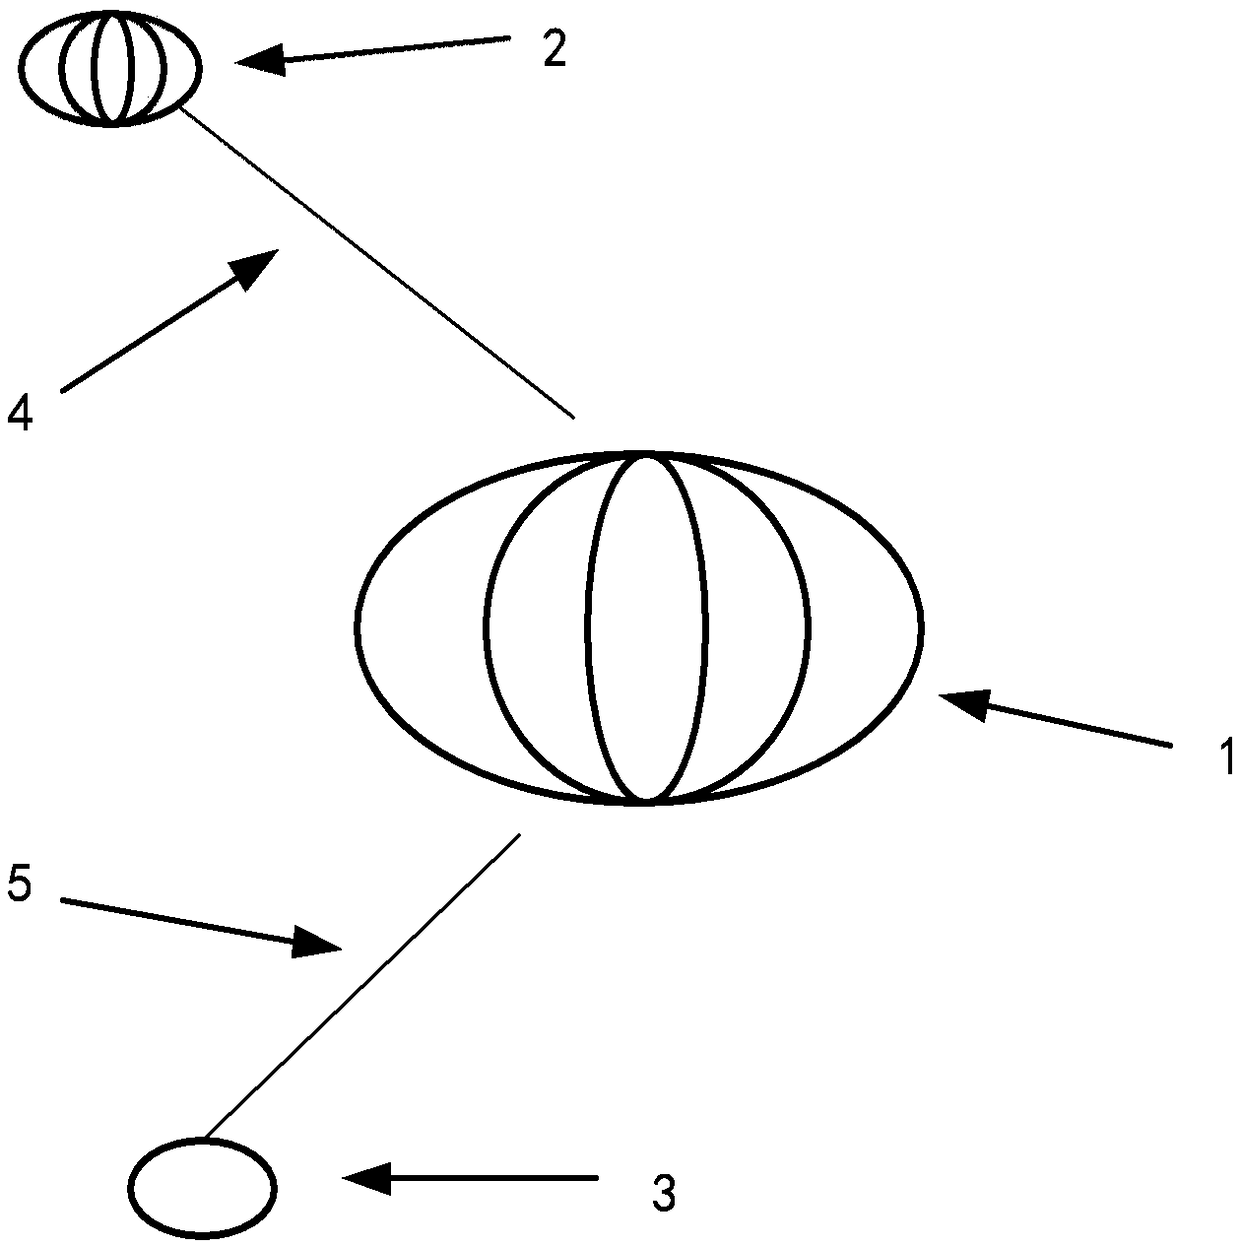 Stratospheric regional resident device and method for overpressure balloon